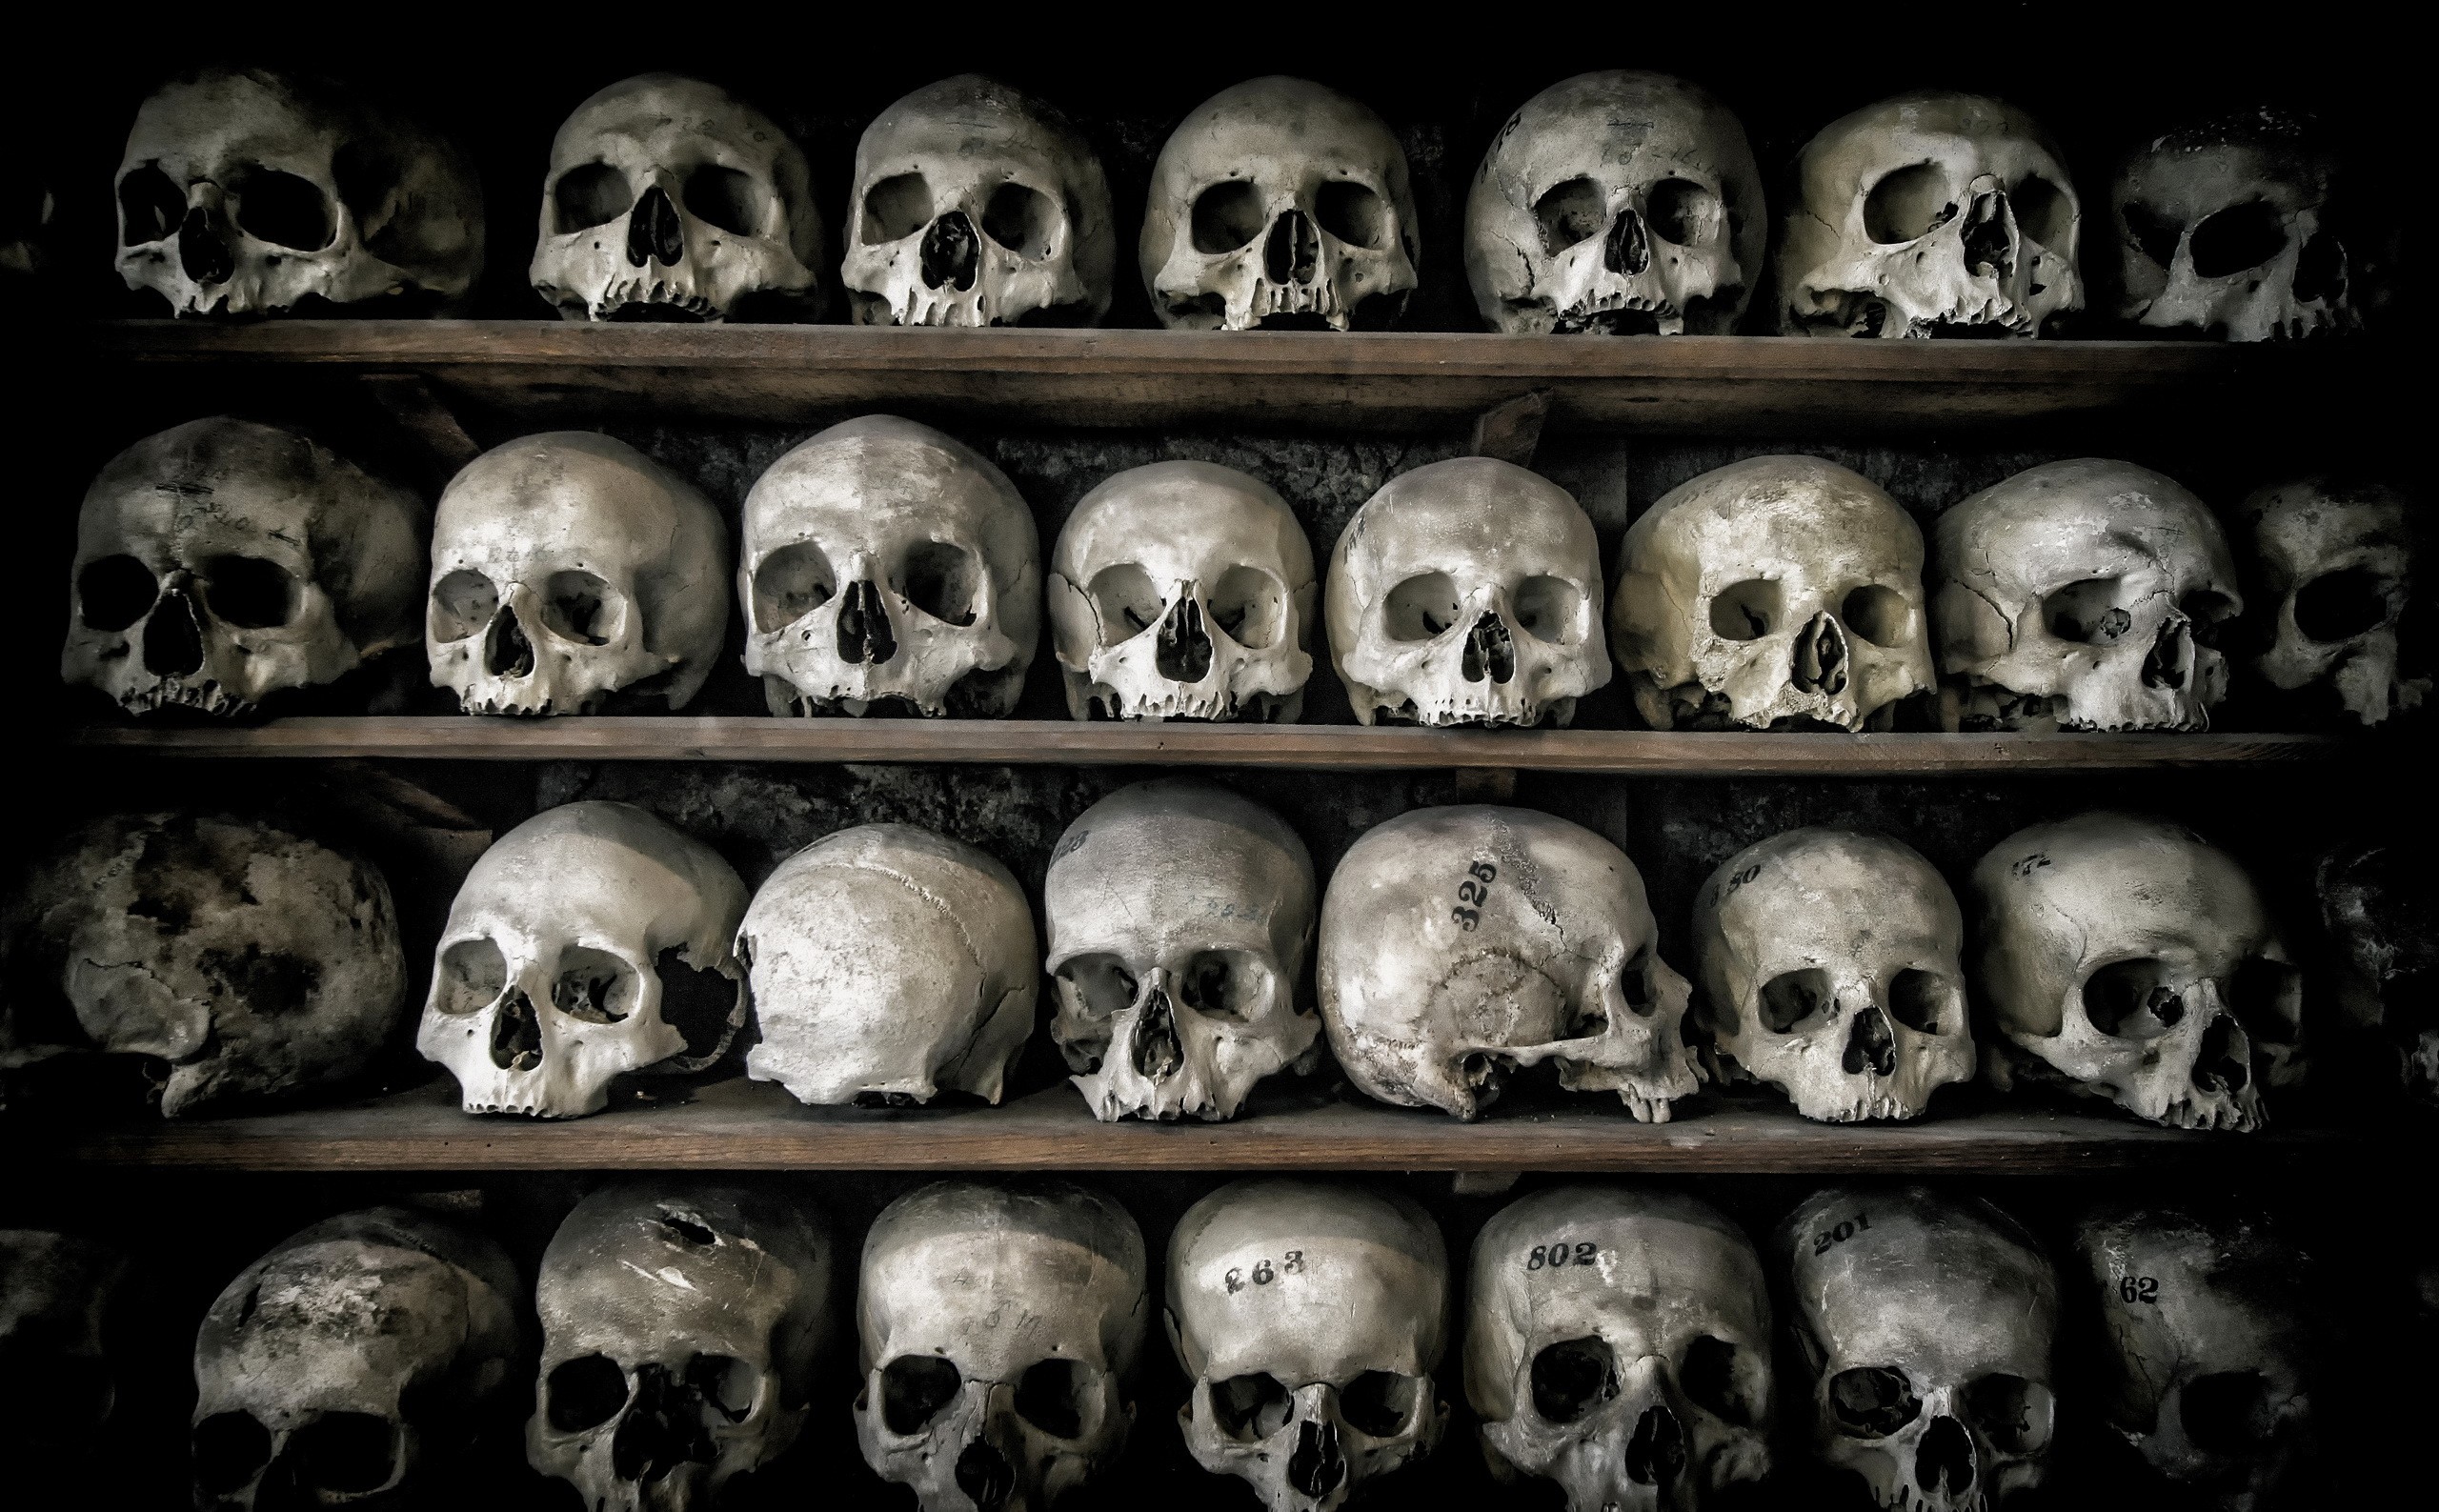 General 2560x1587 death skull bones